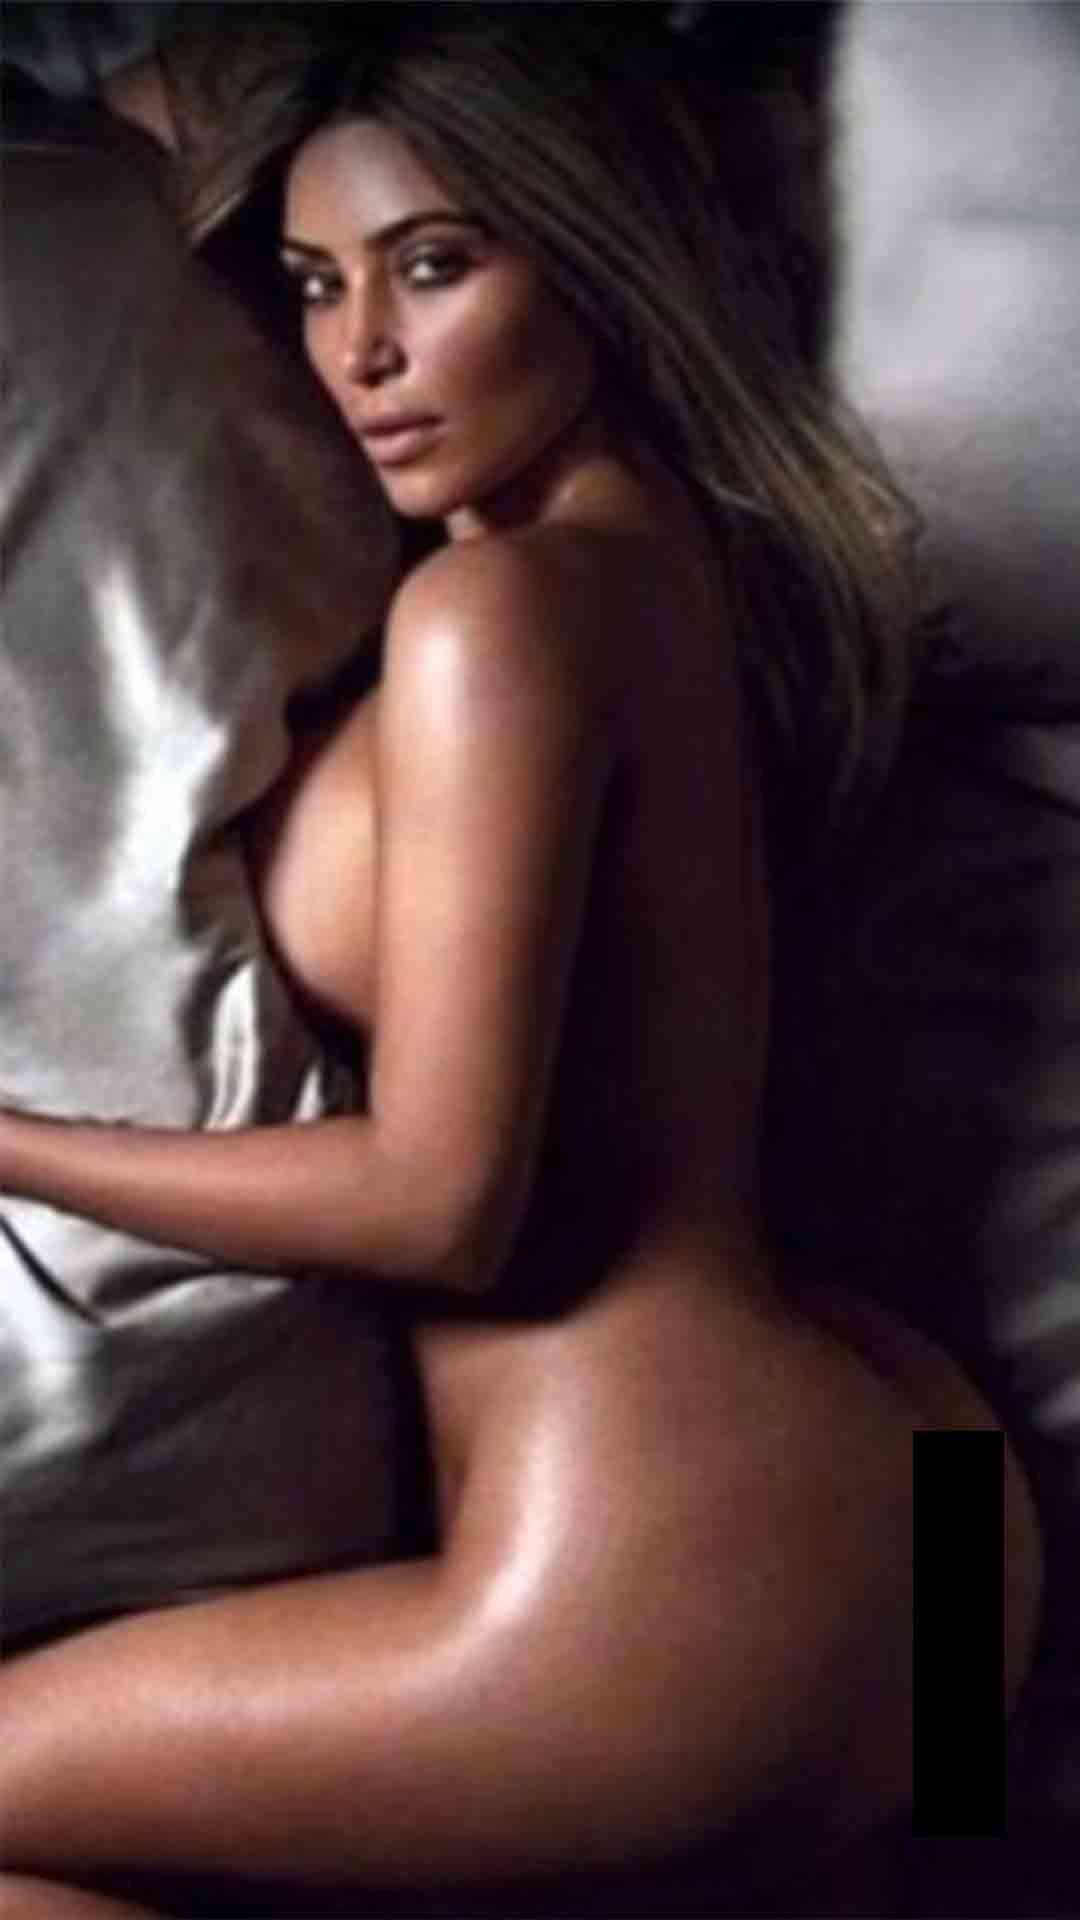 Fotos de desnudos de kim kardashian